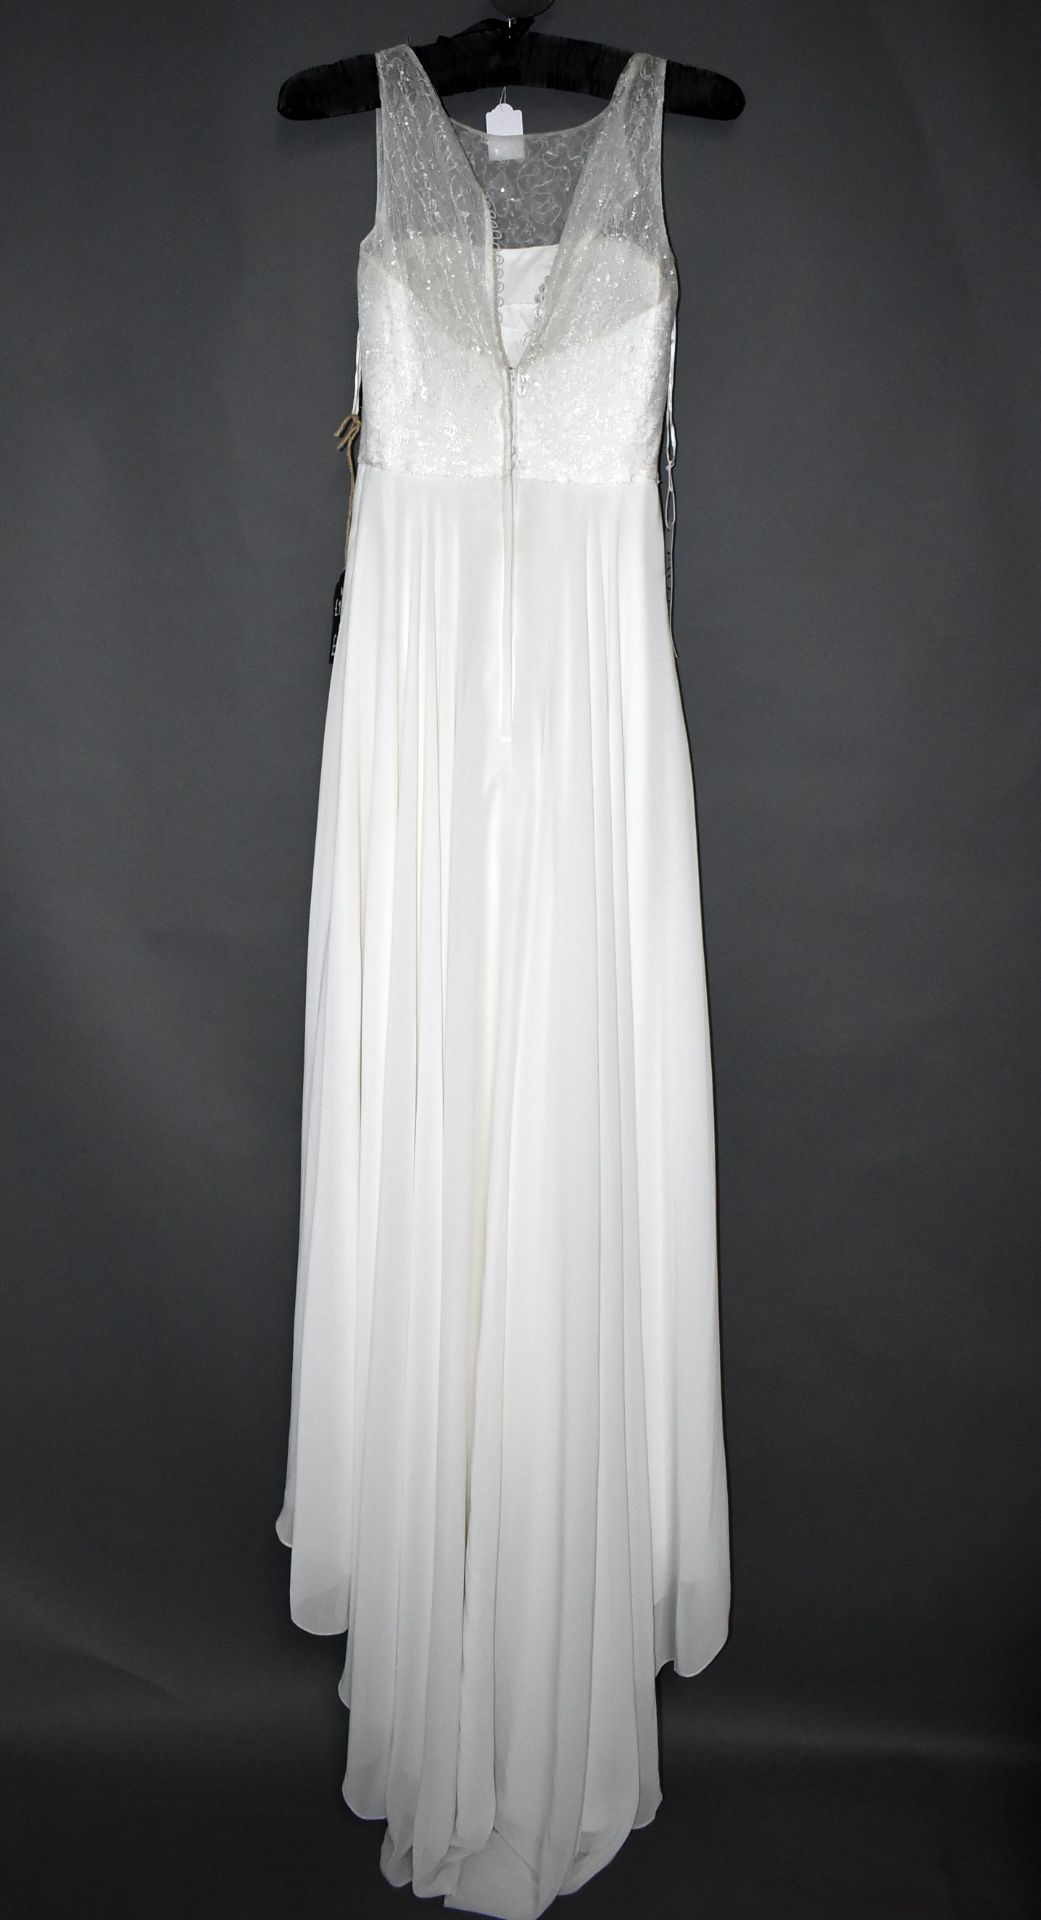 1 x WHITE ROSE Chiffon And Lace Overlay Designer Wedding Dress Bridal Gown RRP £1,050 UK 12 - Image 2 of 4